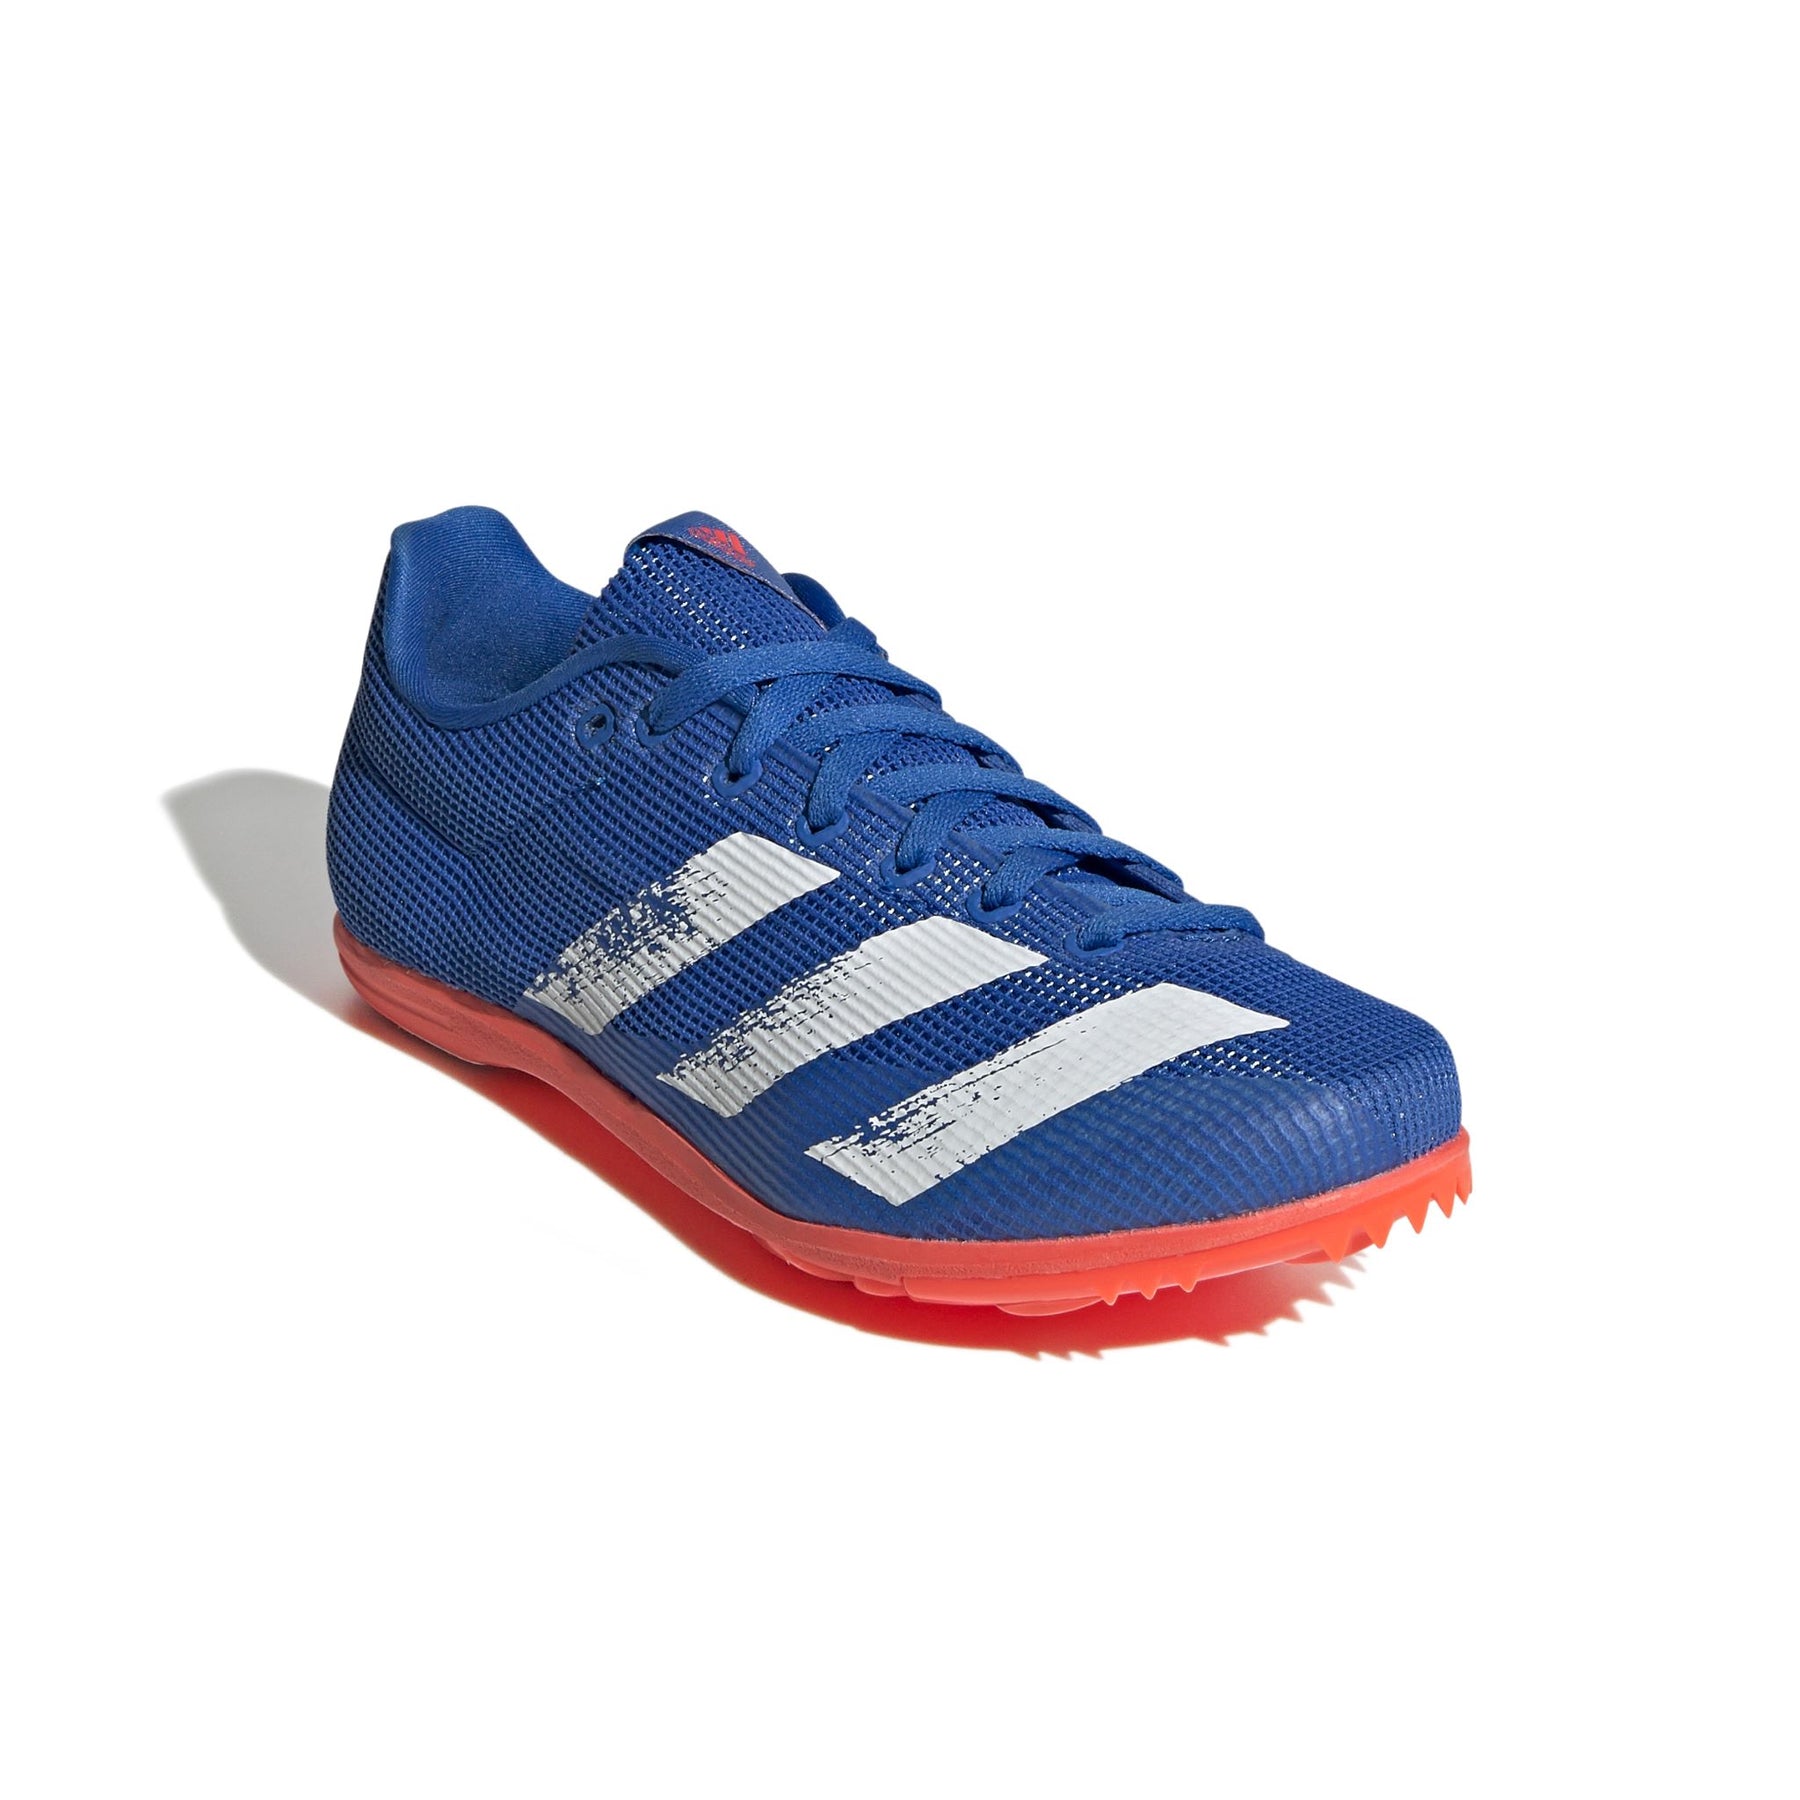 Adidas Allroundstar Kids Running Spikes: Blue